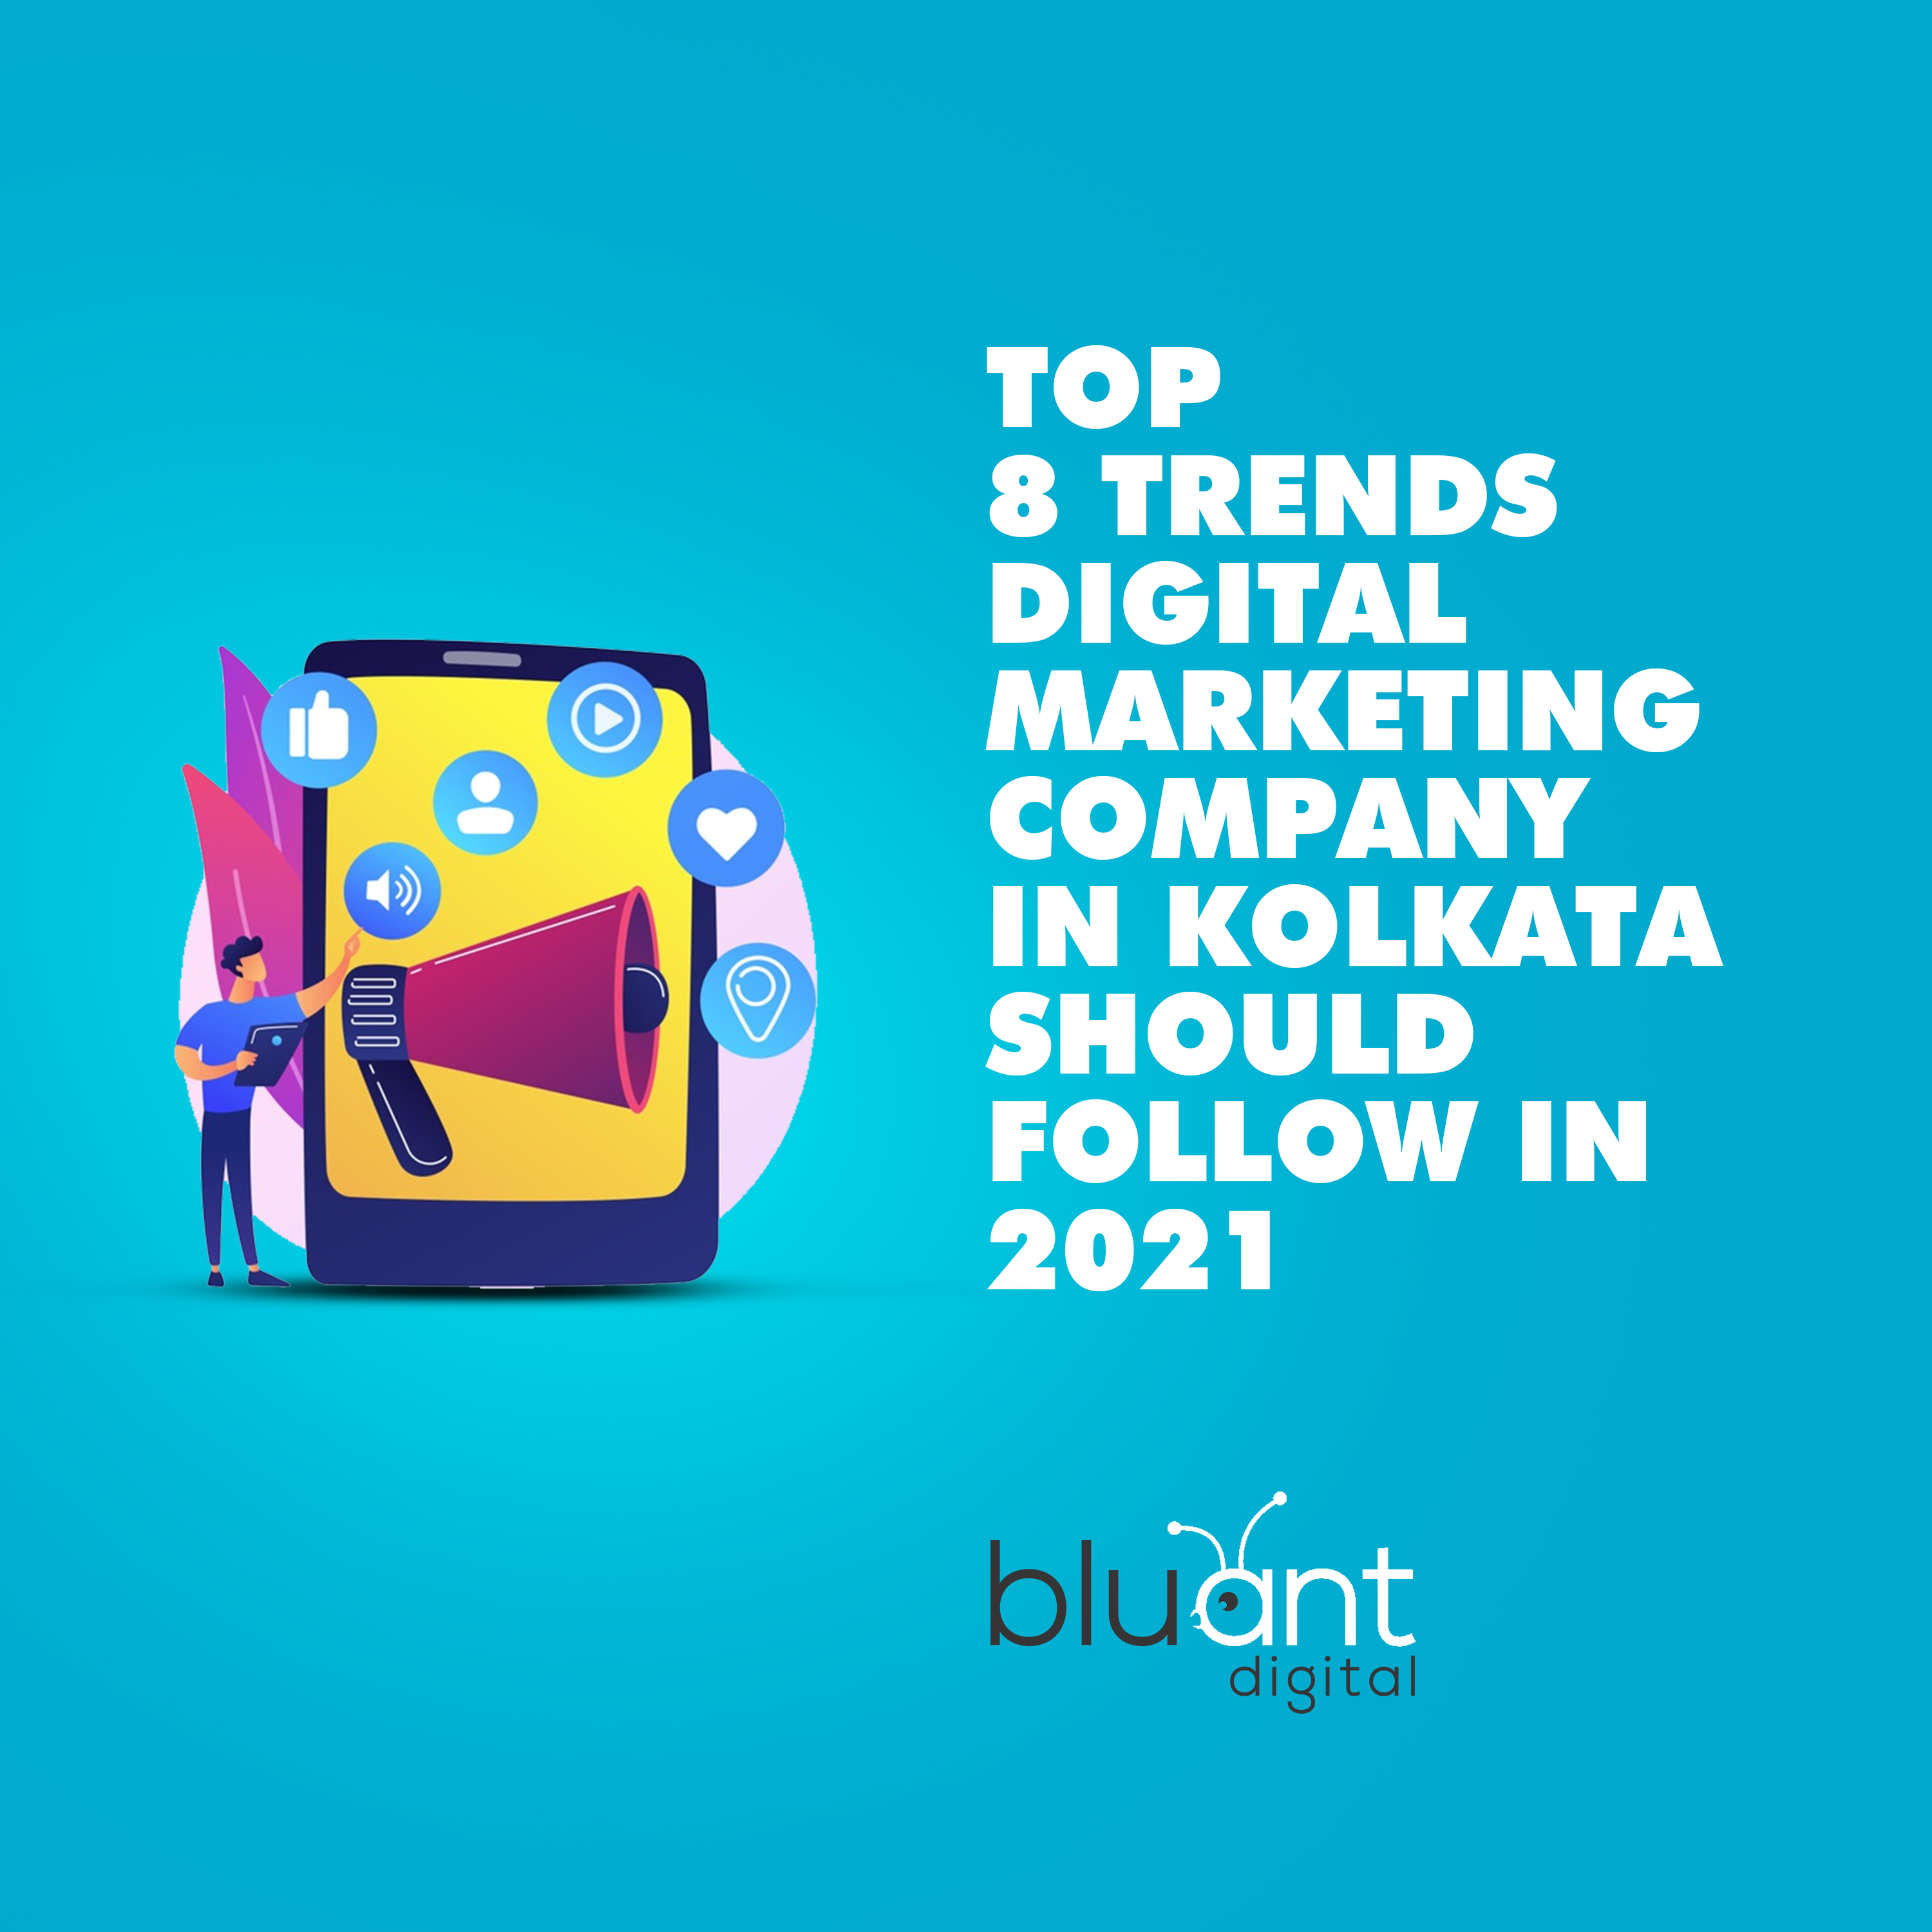 Top 8 Trends Digital Marketing Company in Kolkata Should Follow in 2021